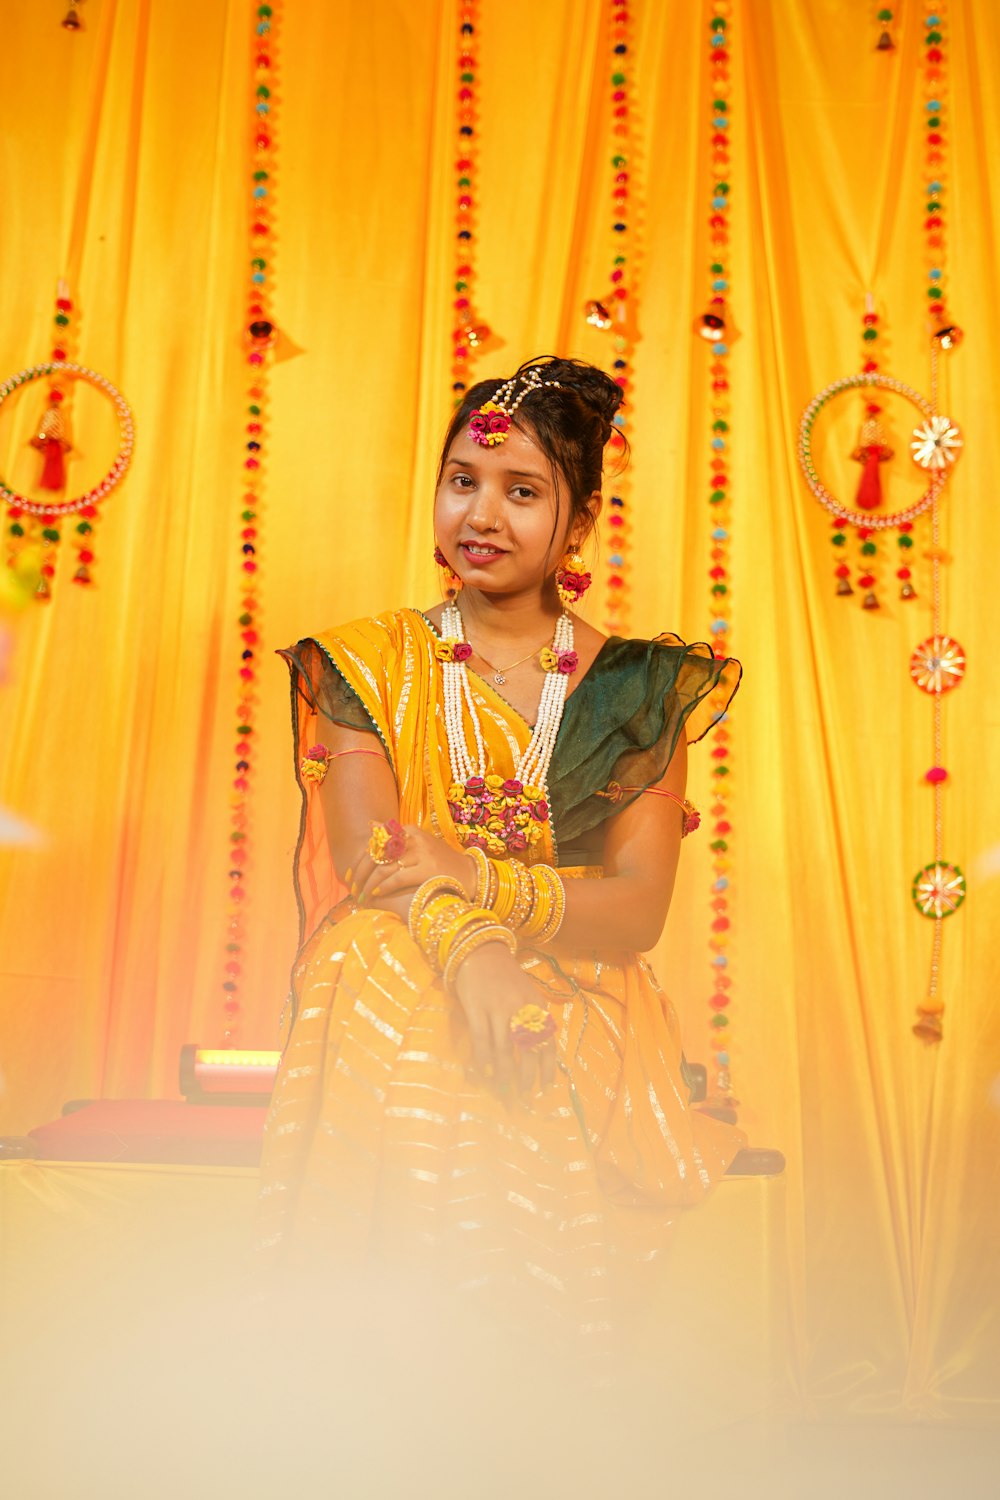 una joven sentada frente a una cortina amarilla